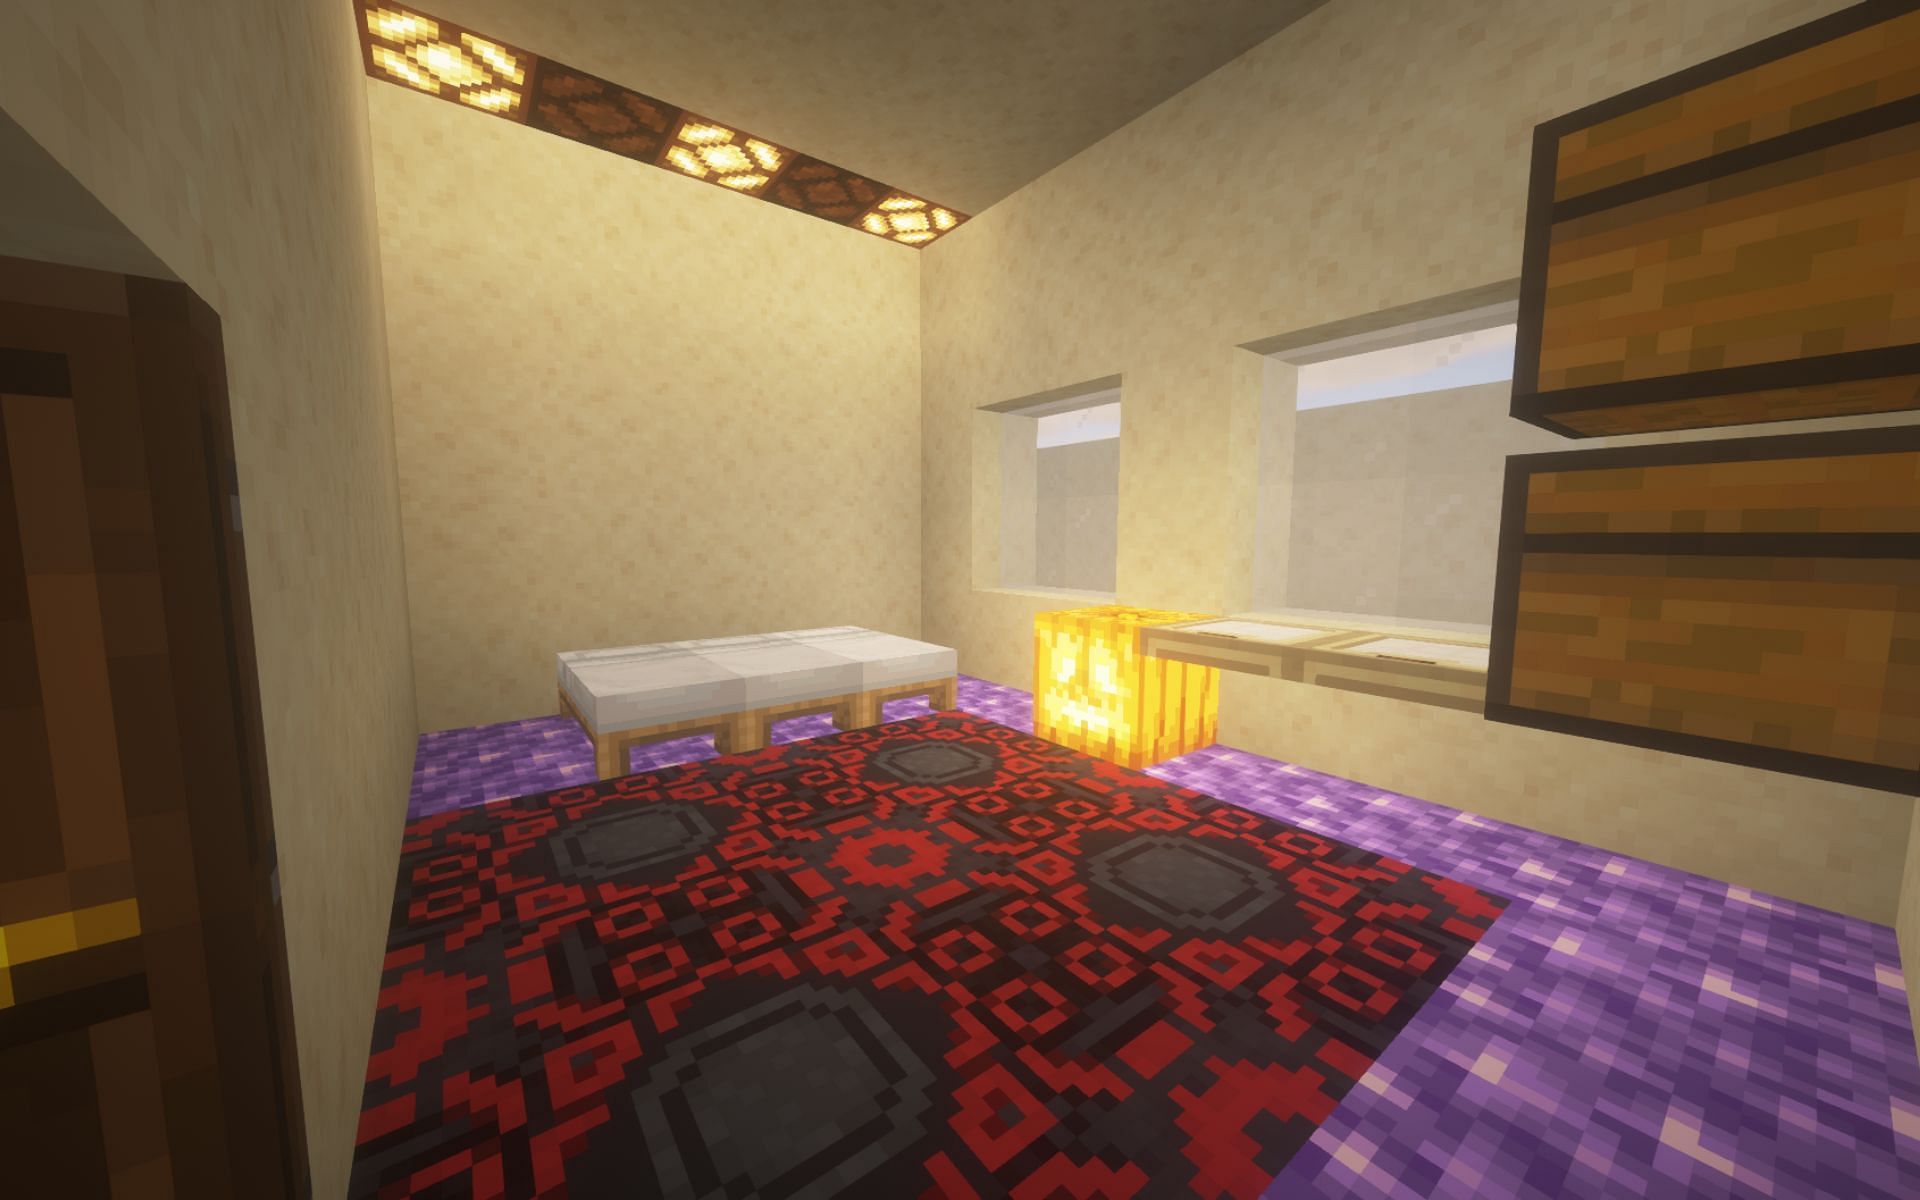 5 best blocks for interior designing (Image via Minecraft)